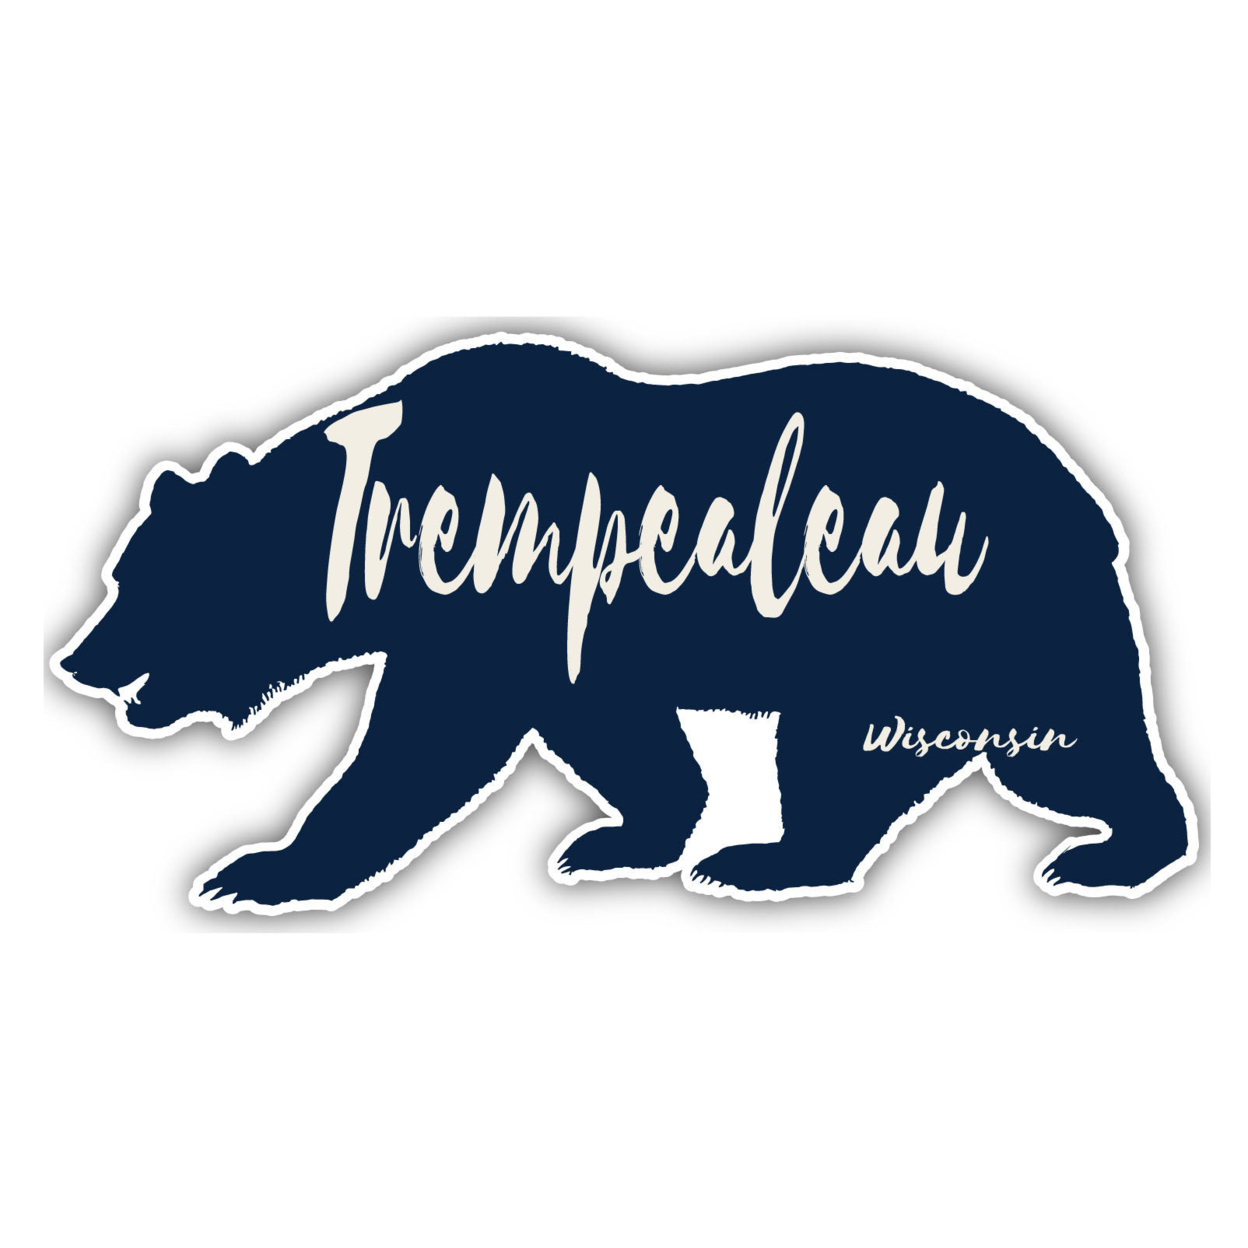 Trempealeau Wisconsin Souvenir Decorative Stickers (Choose Theme And Size) - Single Unit, 2-Inch, Bear